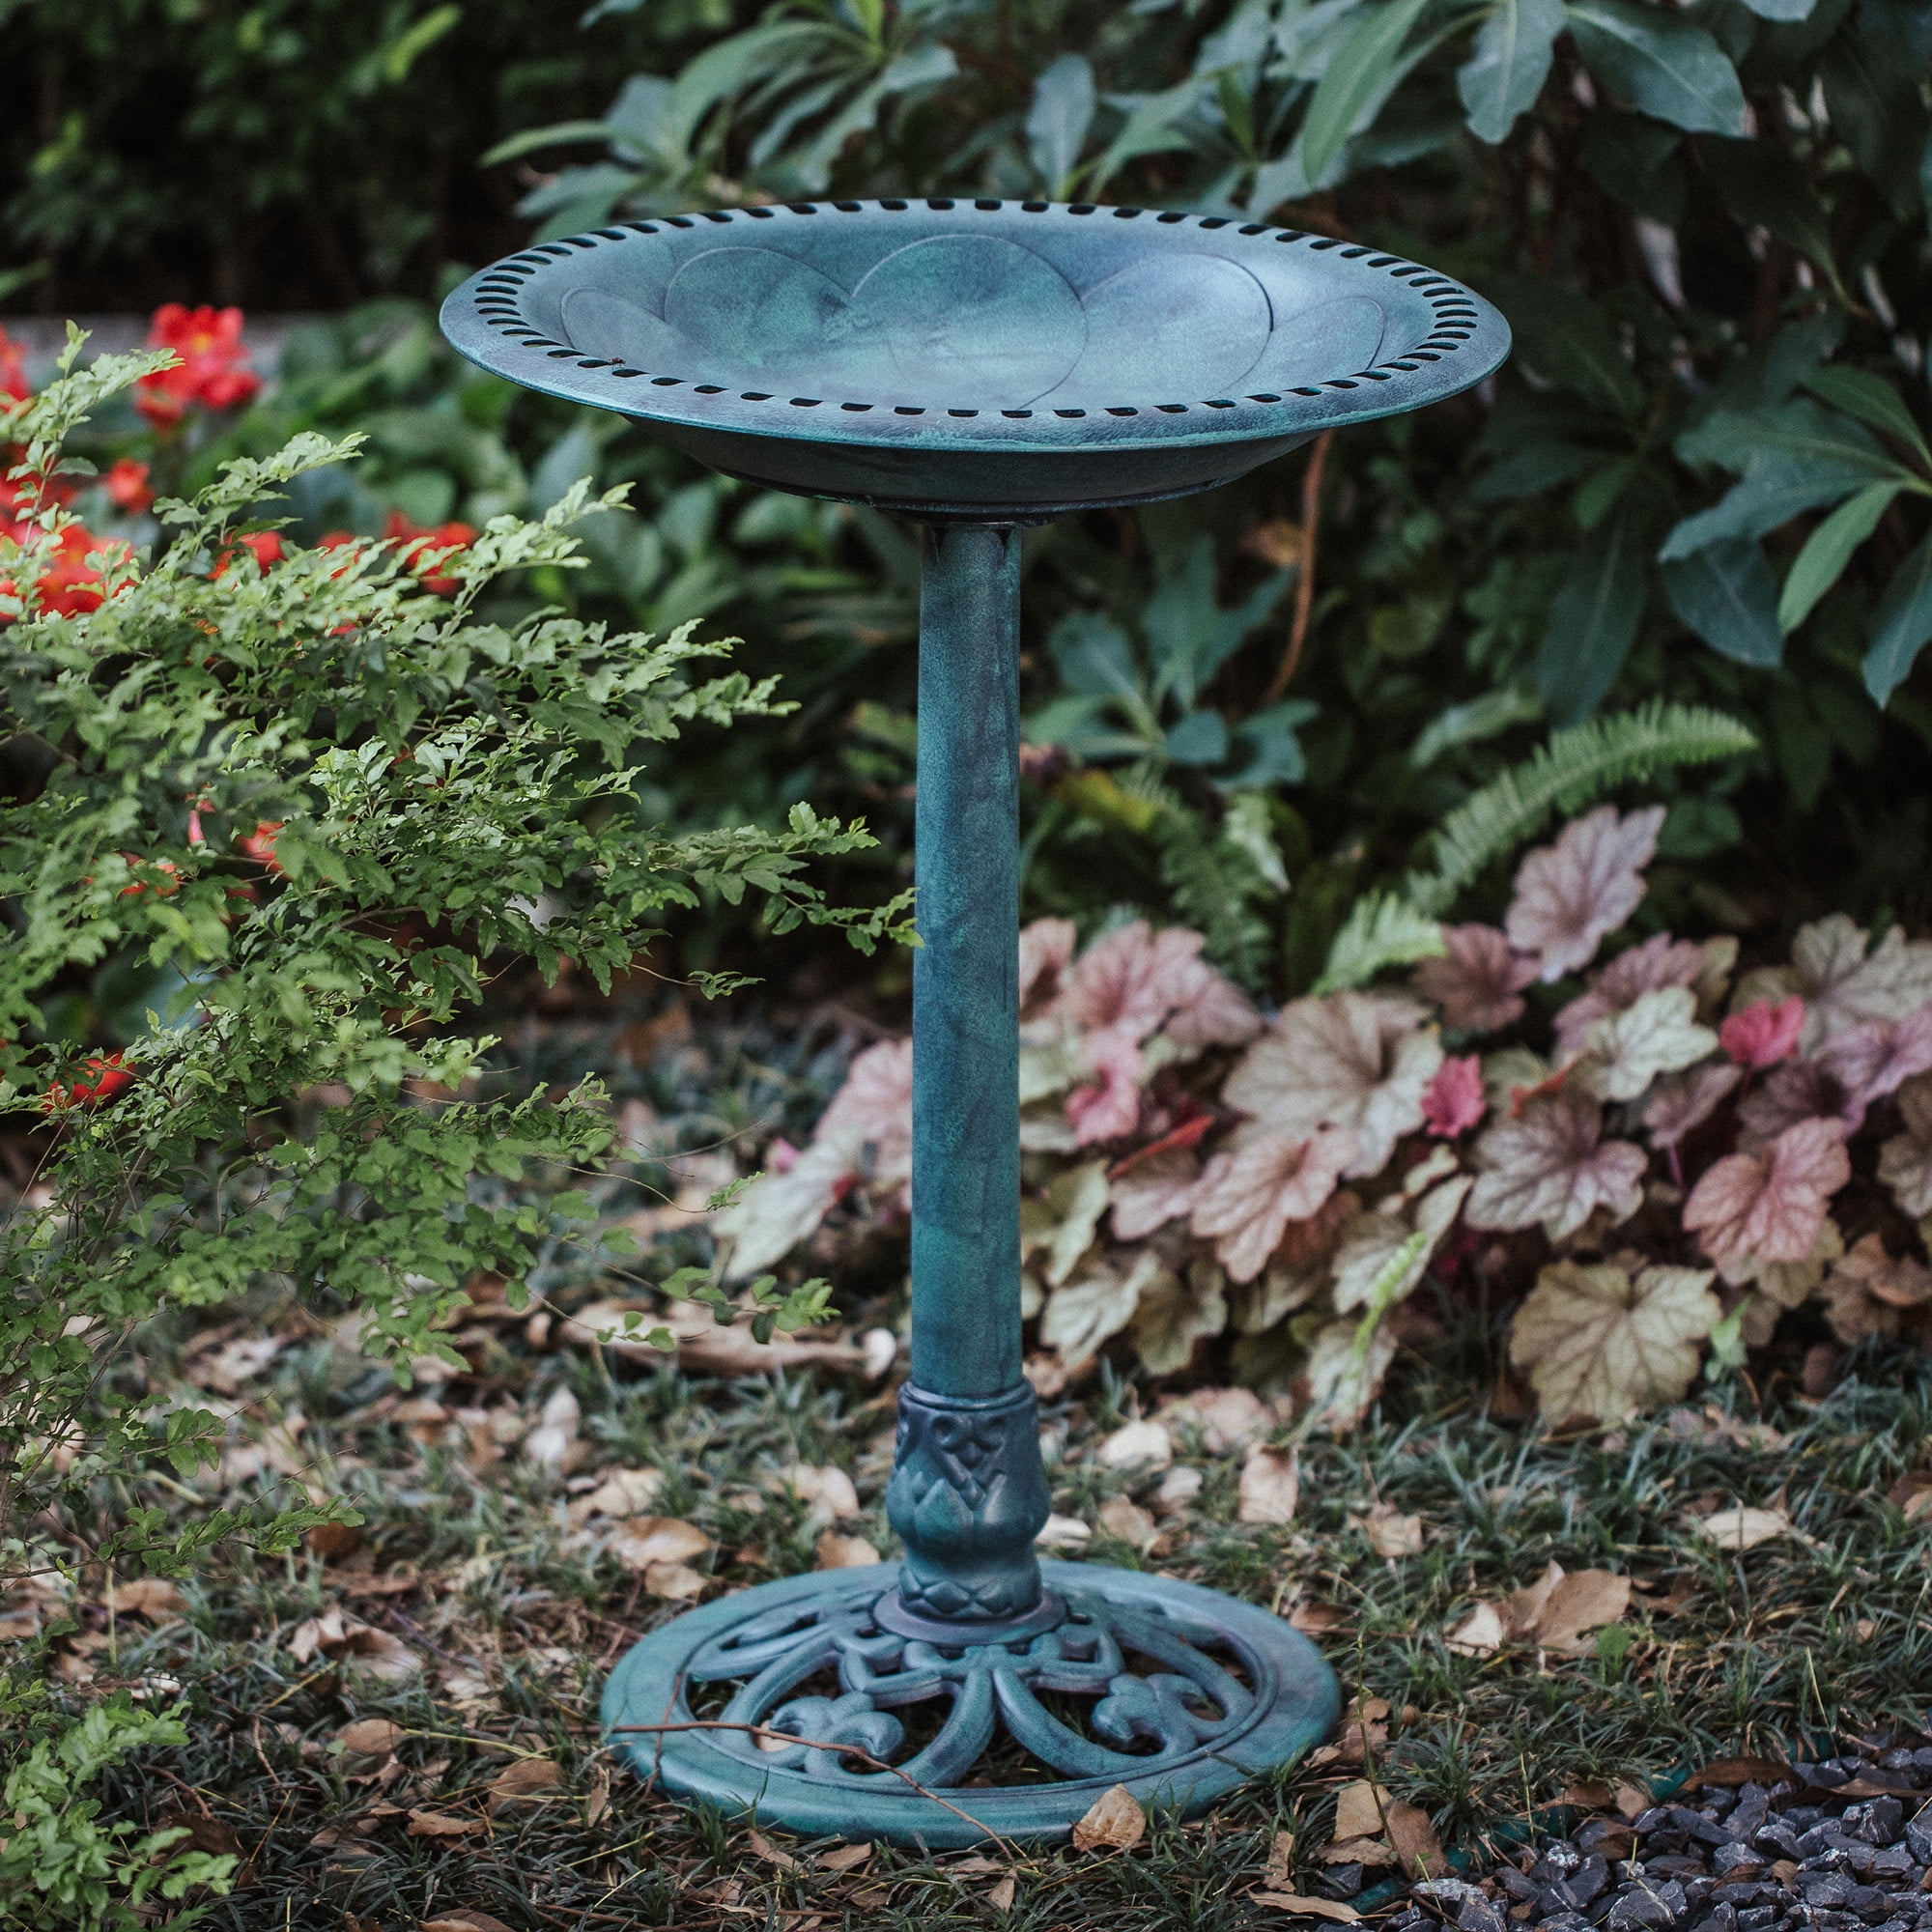 Antique BirdBath Outdoor Garden Pedestal Vintage Decor Patio Planter Plant Stand 